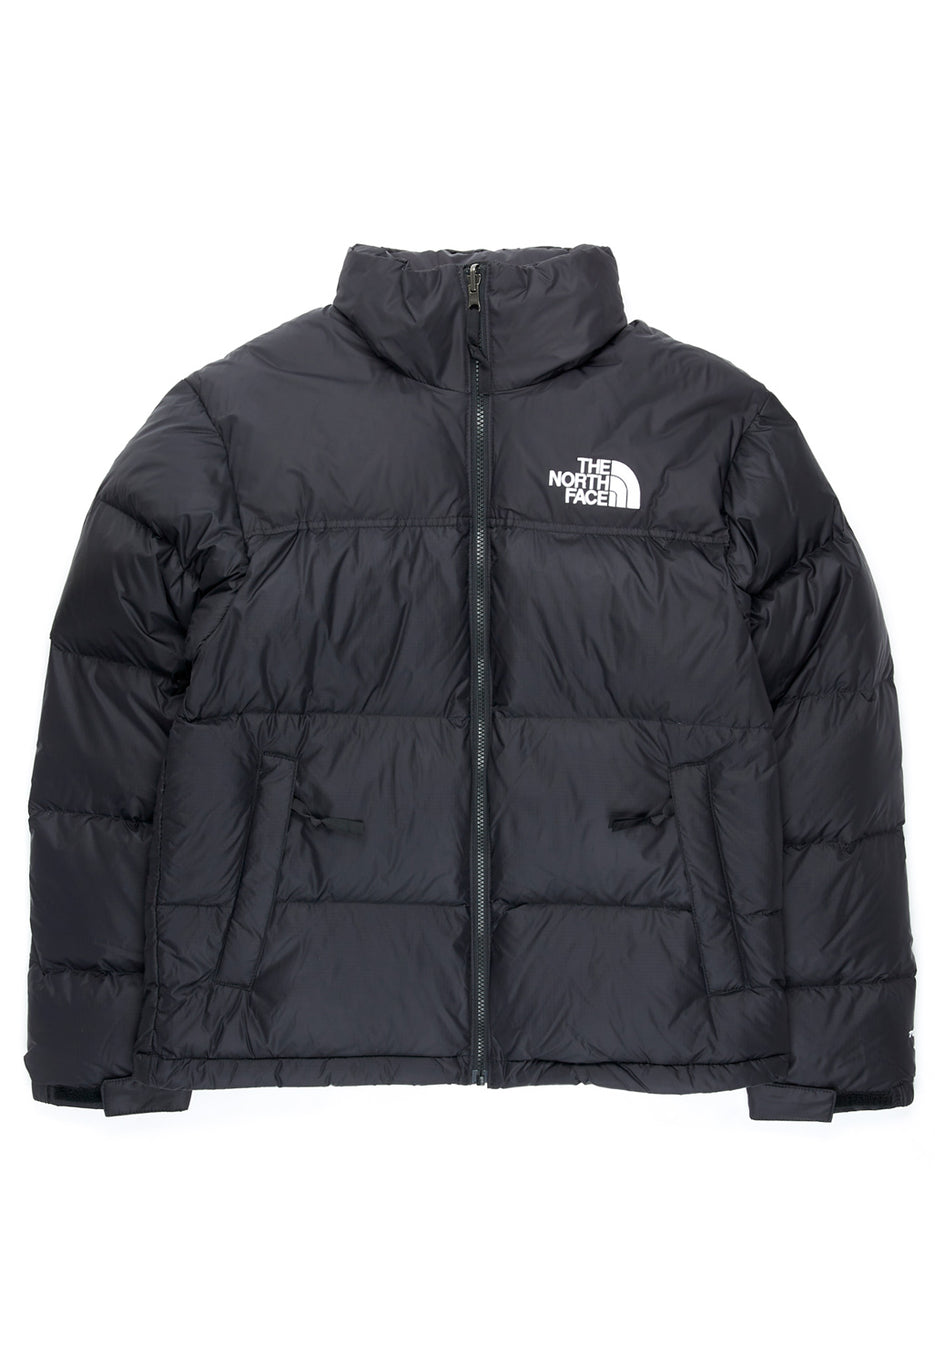 The North Face 1996 Retro Nuptse Men's Jacket - Recycled TNF Black